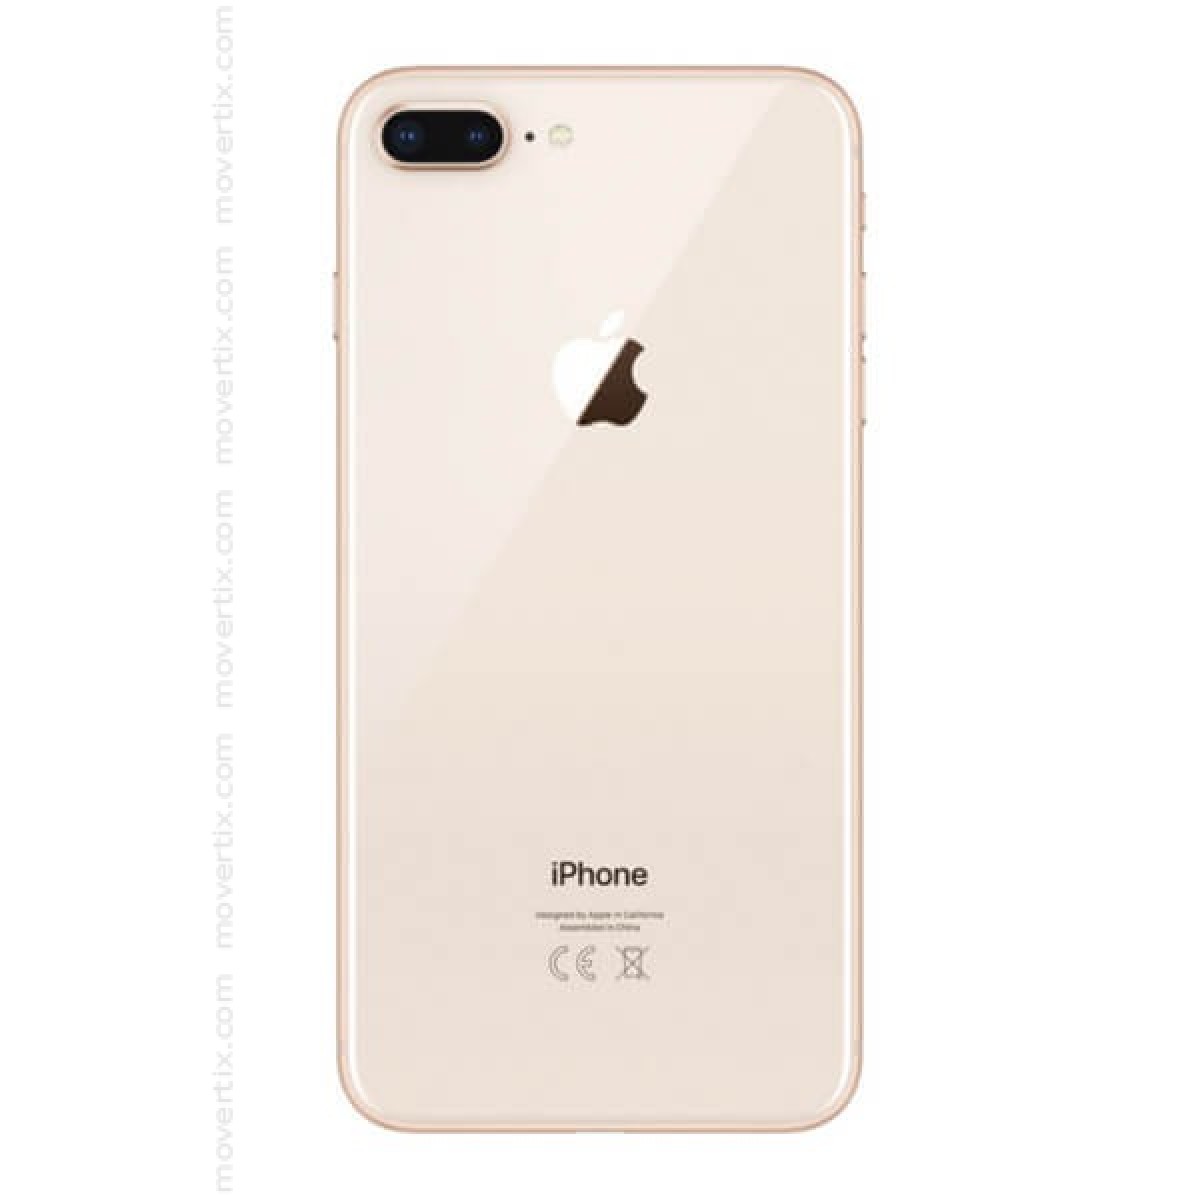 iPhone 8 Plus Gold 256GB (0190198455949) Movertix Mobile Phones Shop